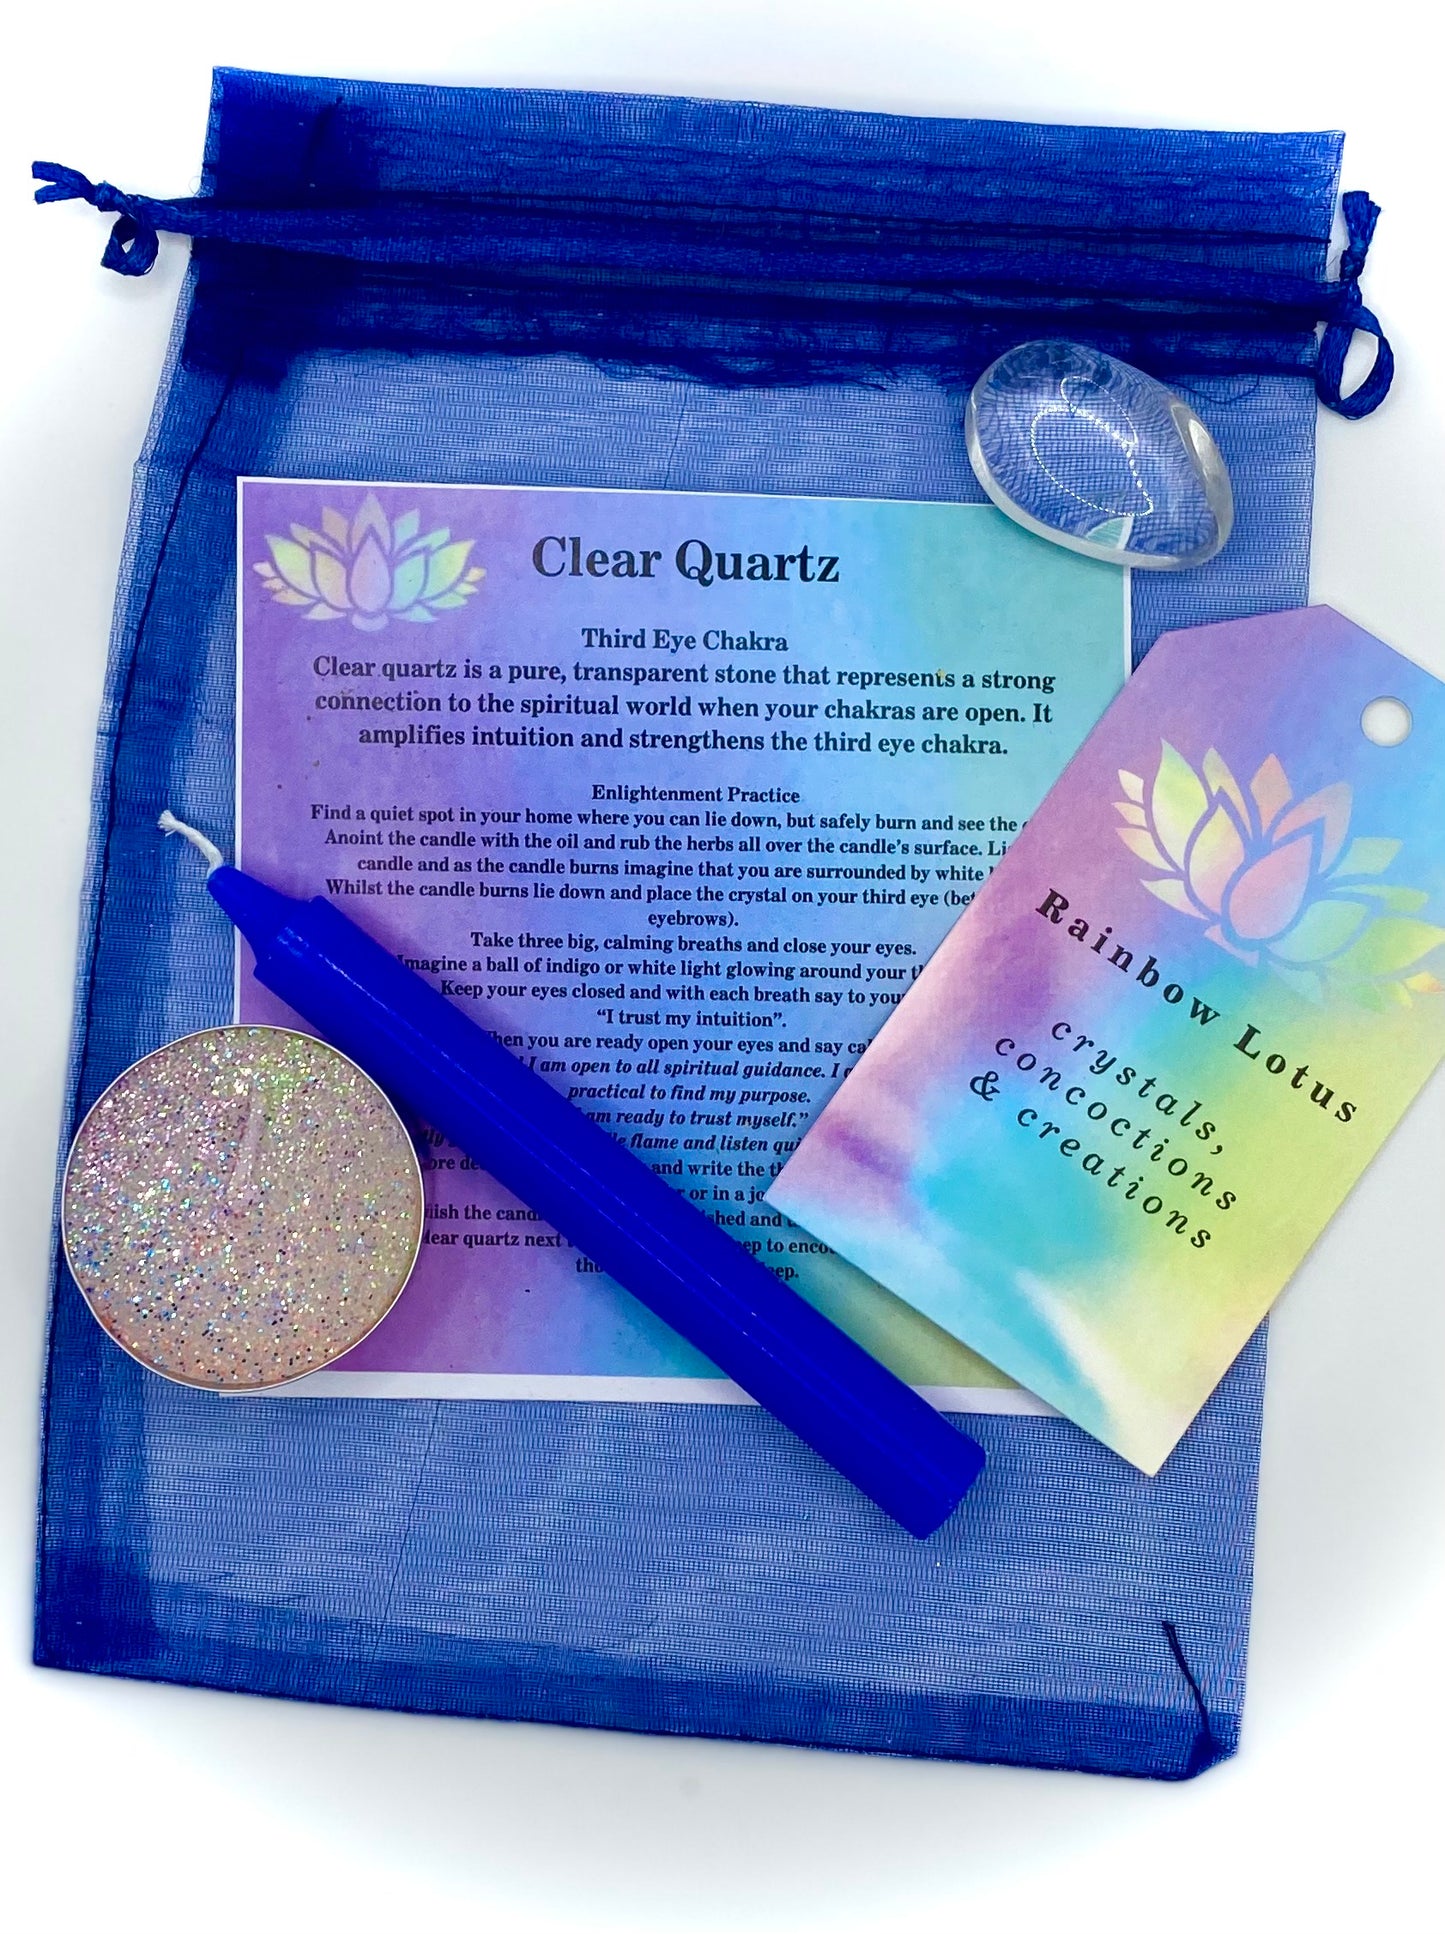 Third Eye Chakra Clear Quartz Spell Kit